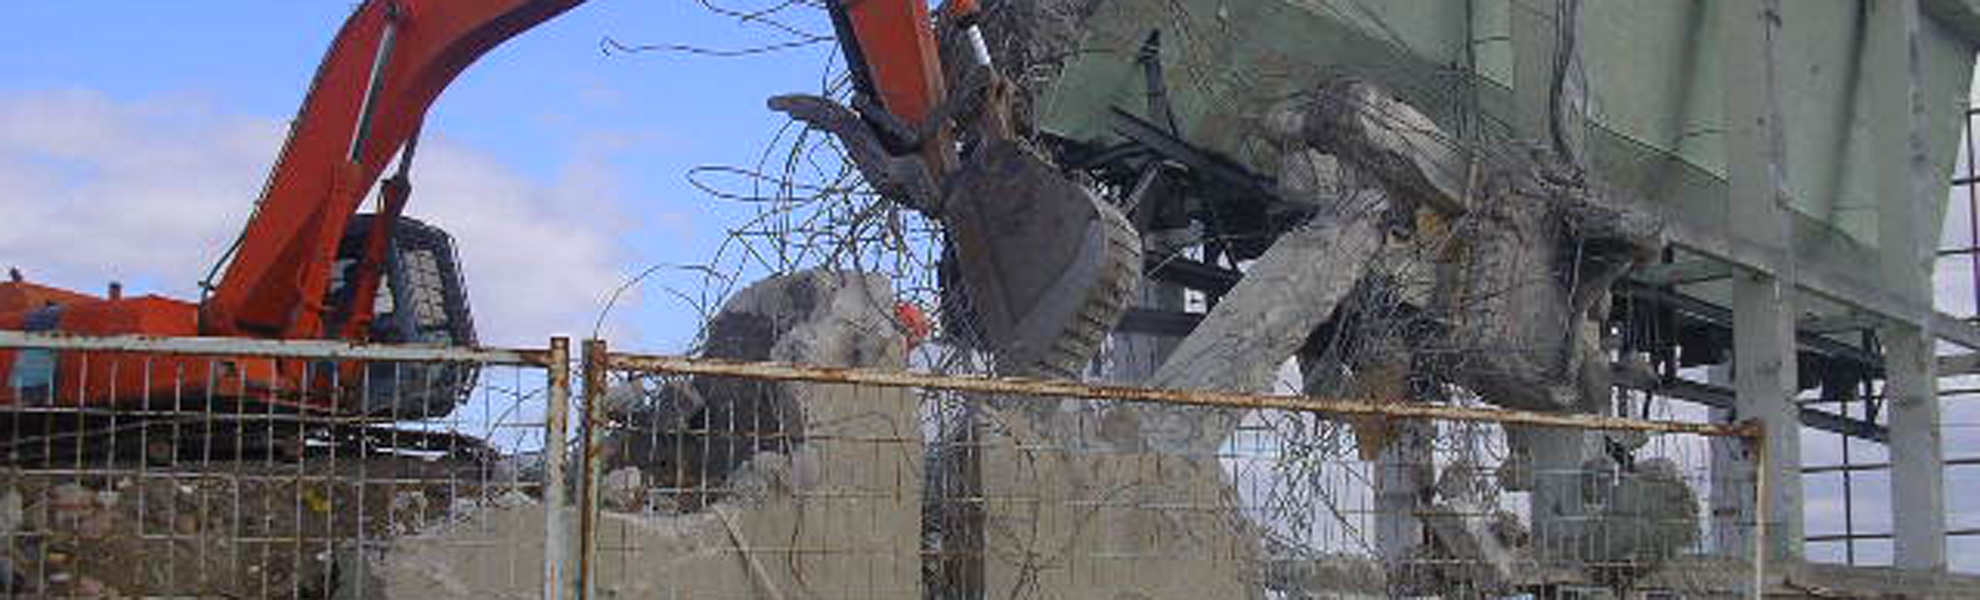 Adair's Demolition